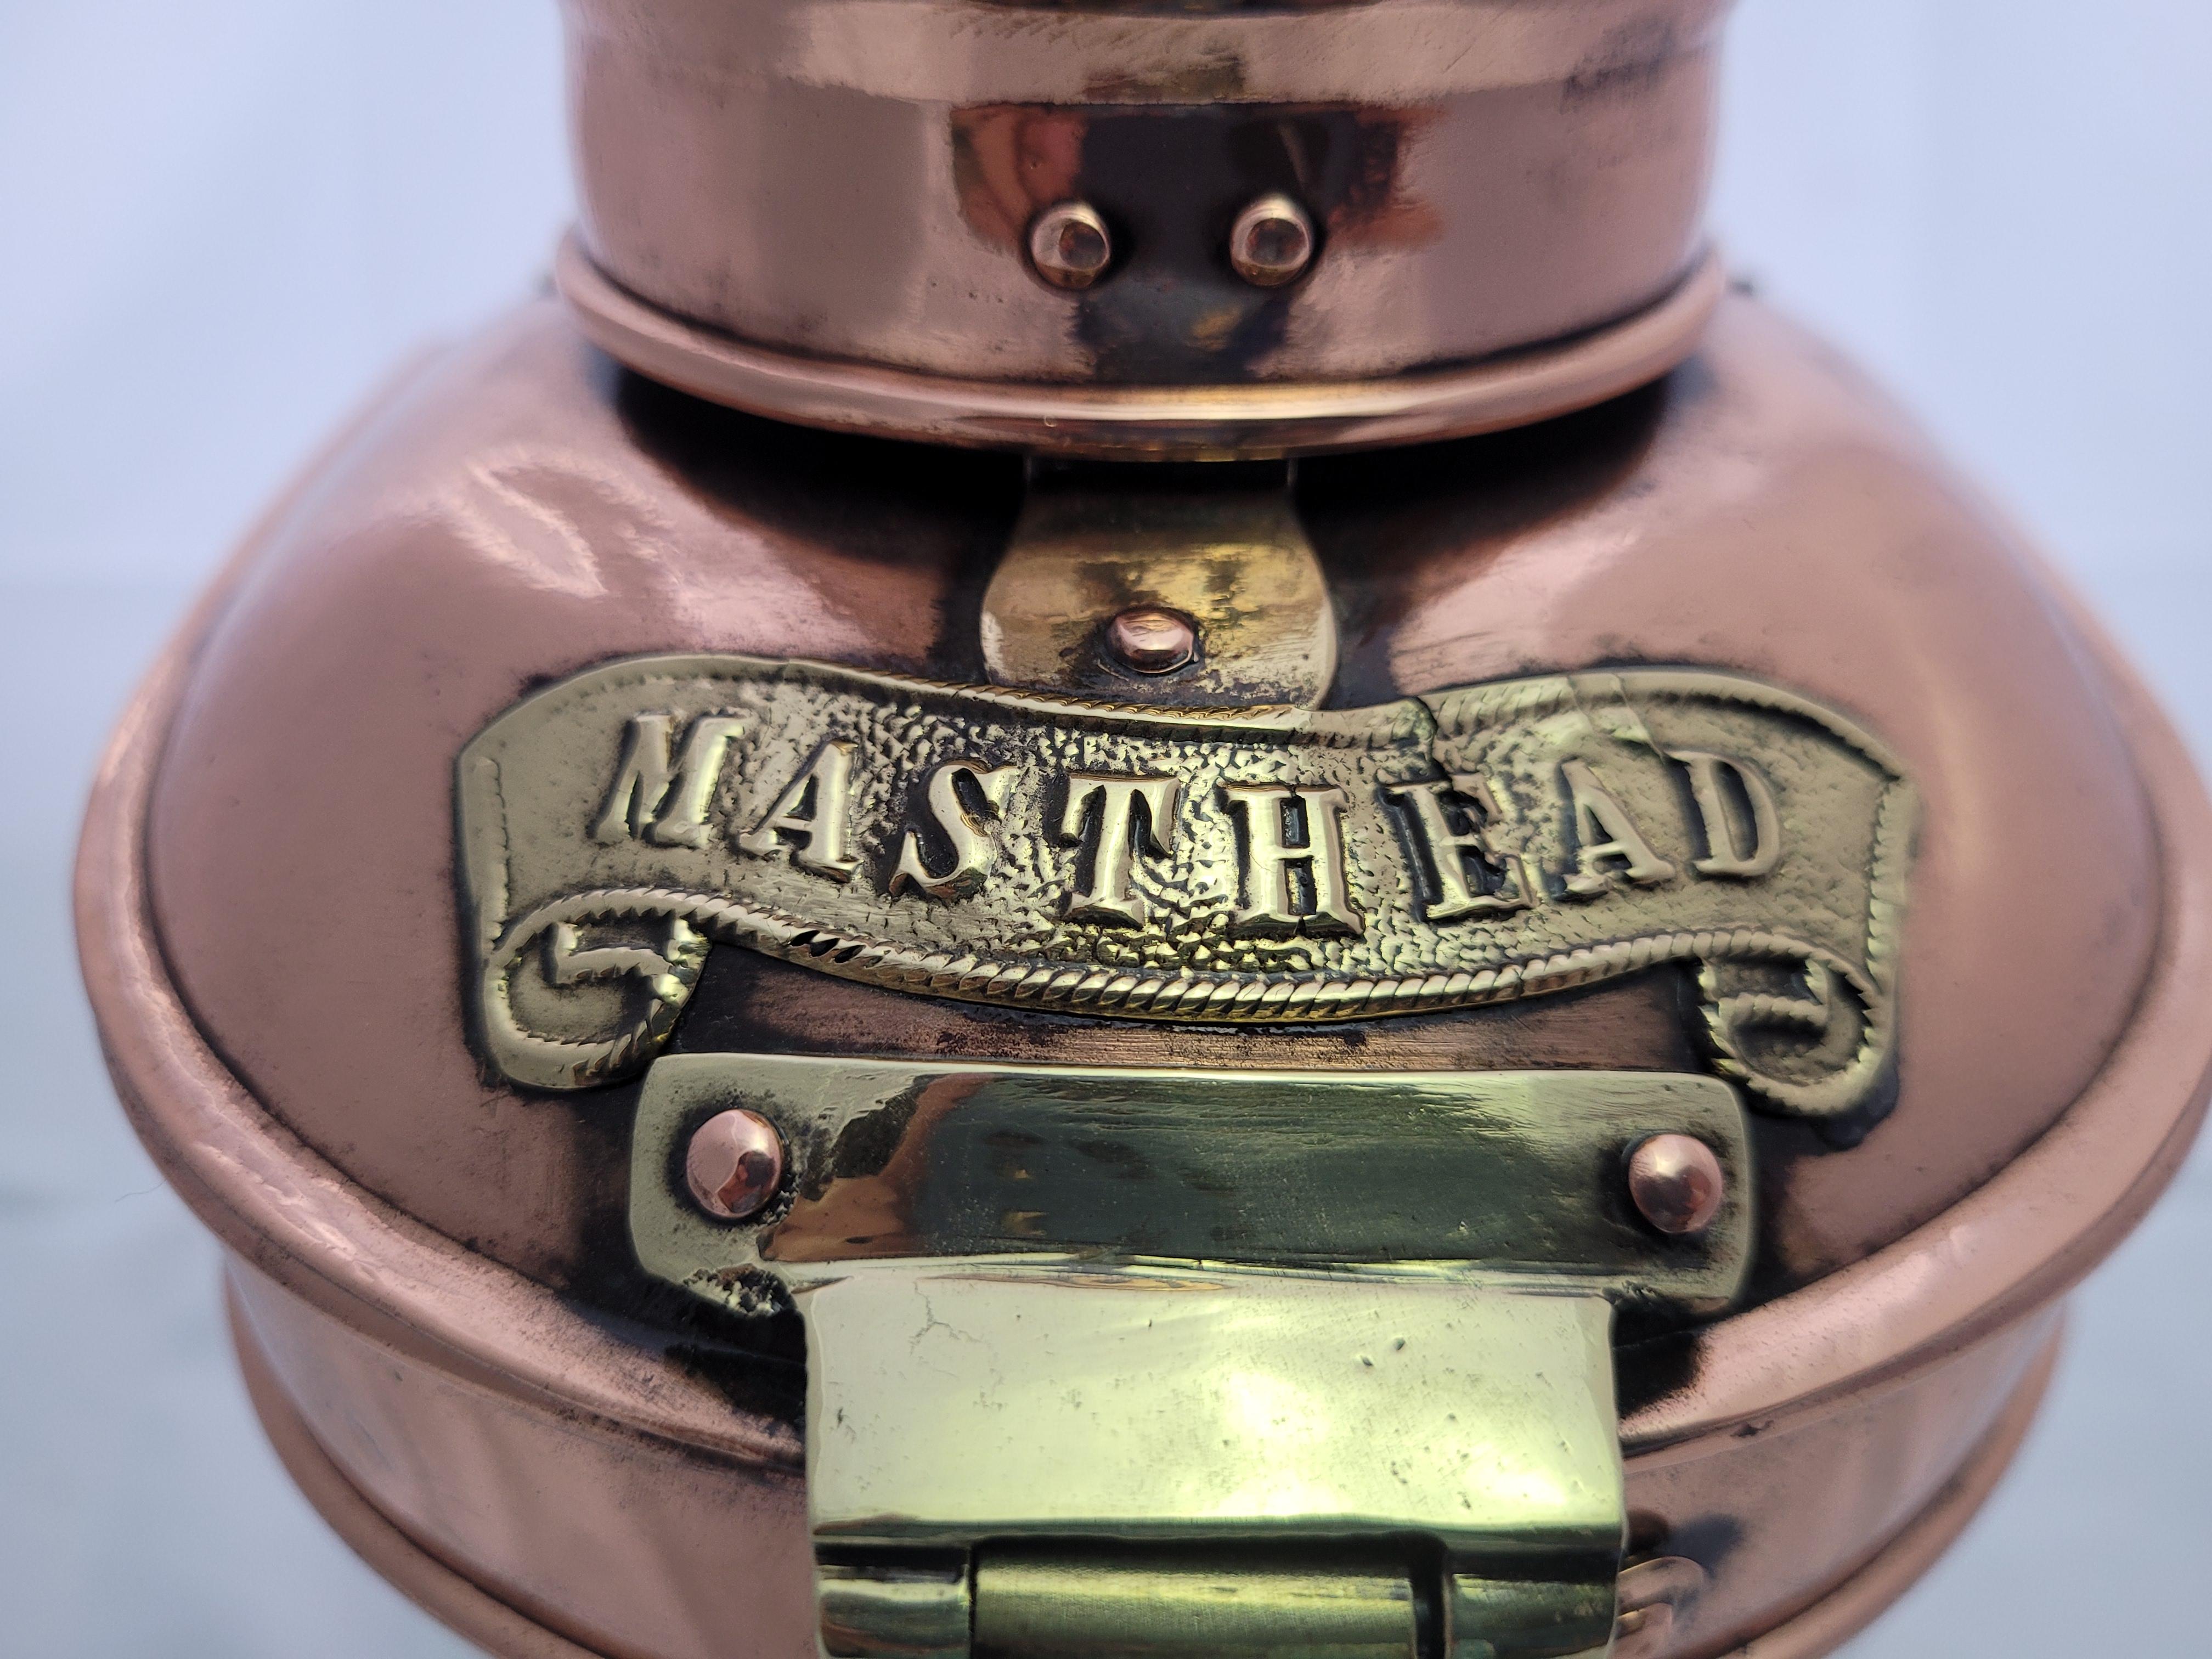 Early 20th Century British Ships Masthead Lantern For Sale